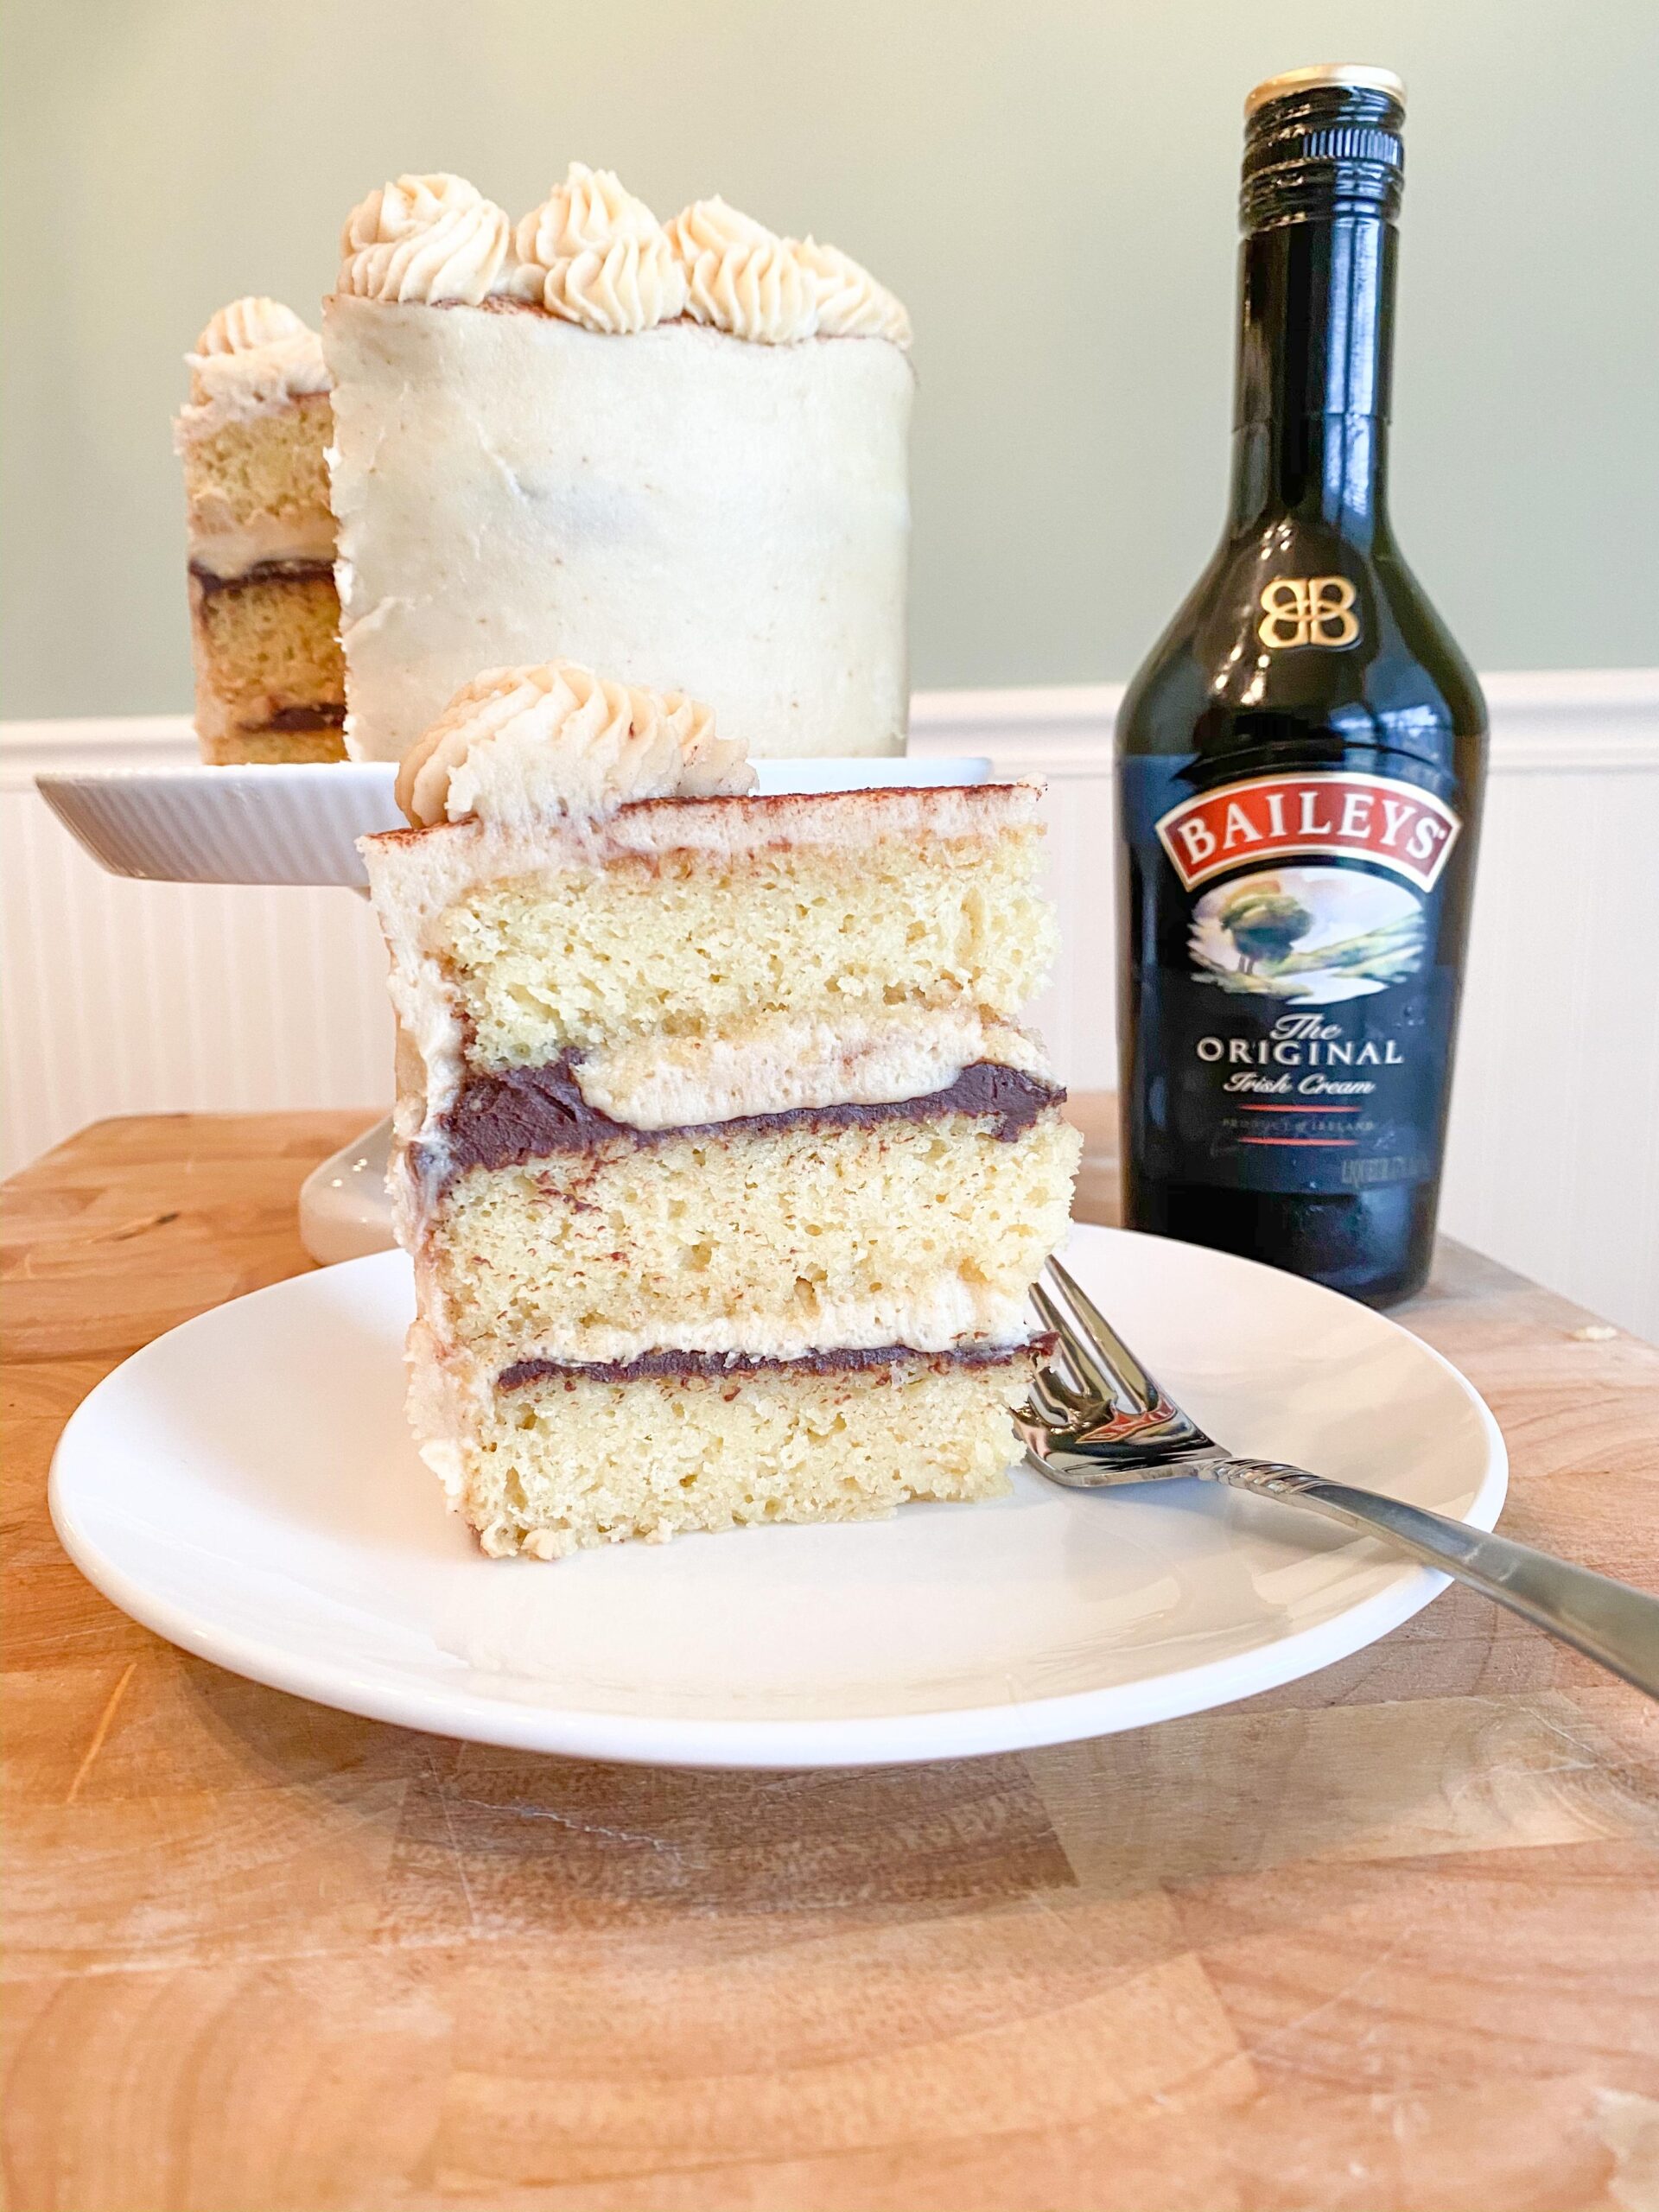  Nothing beats the taste and texture of this Irish Cream Cake.